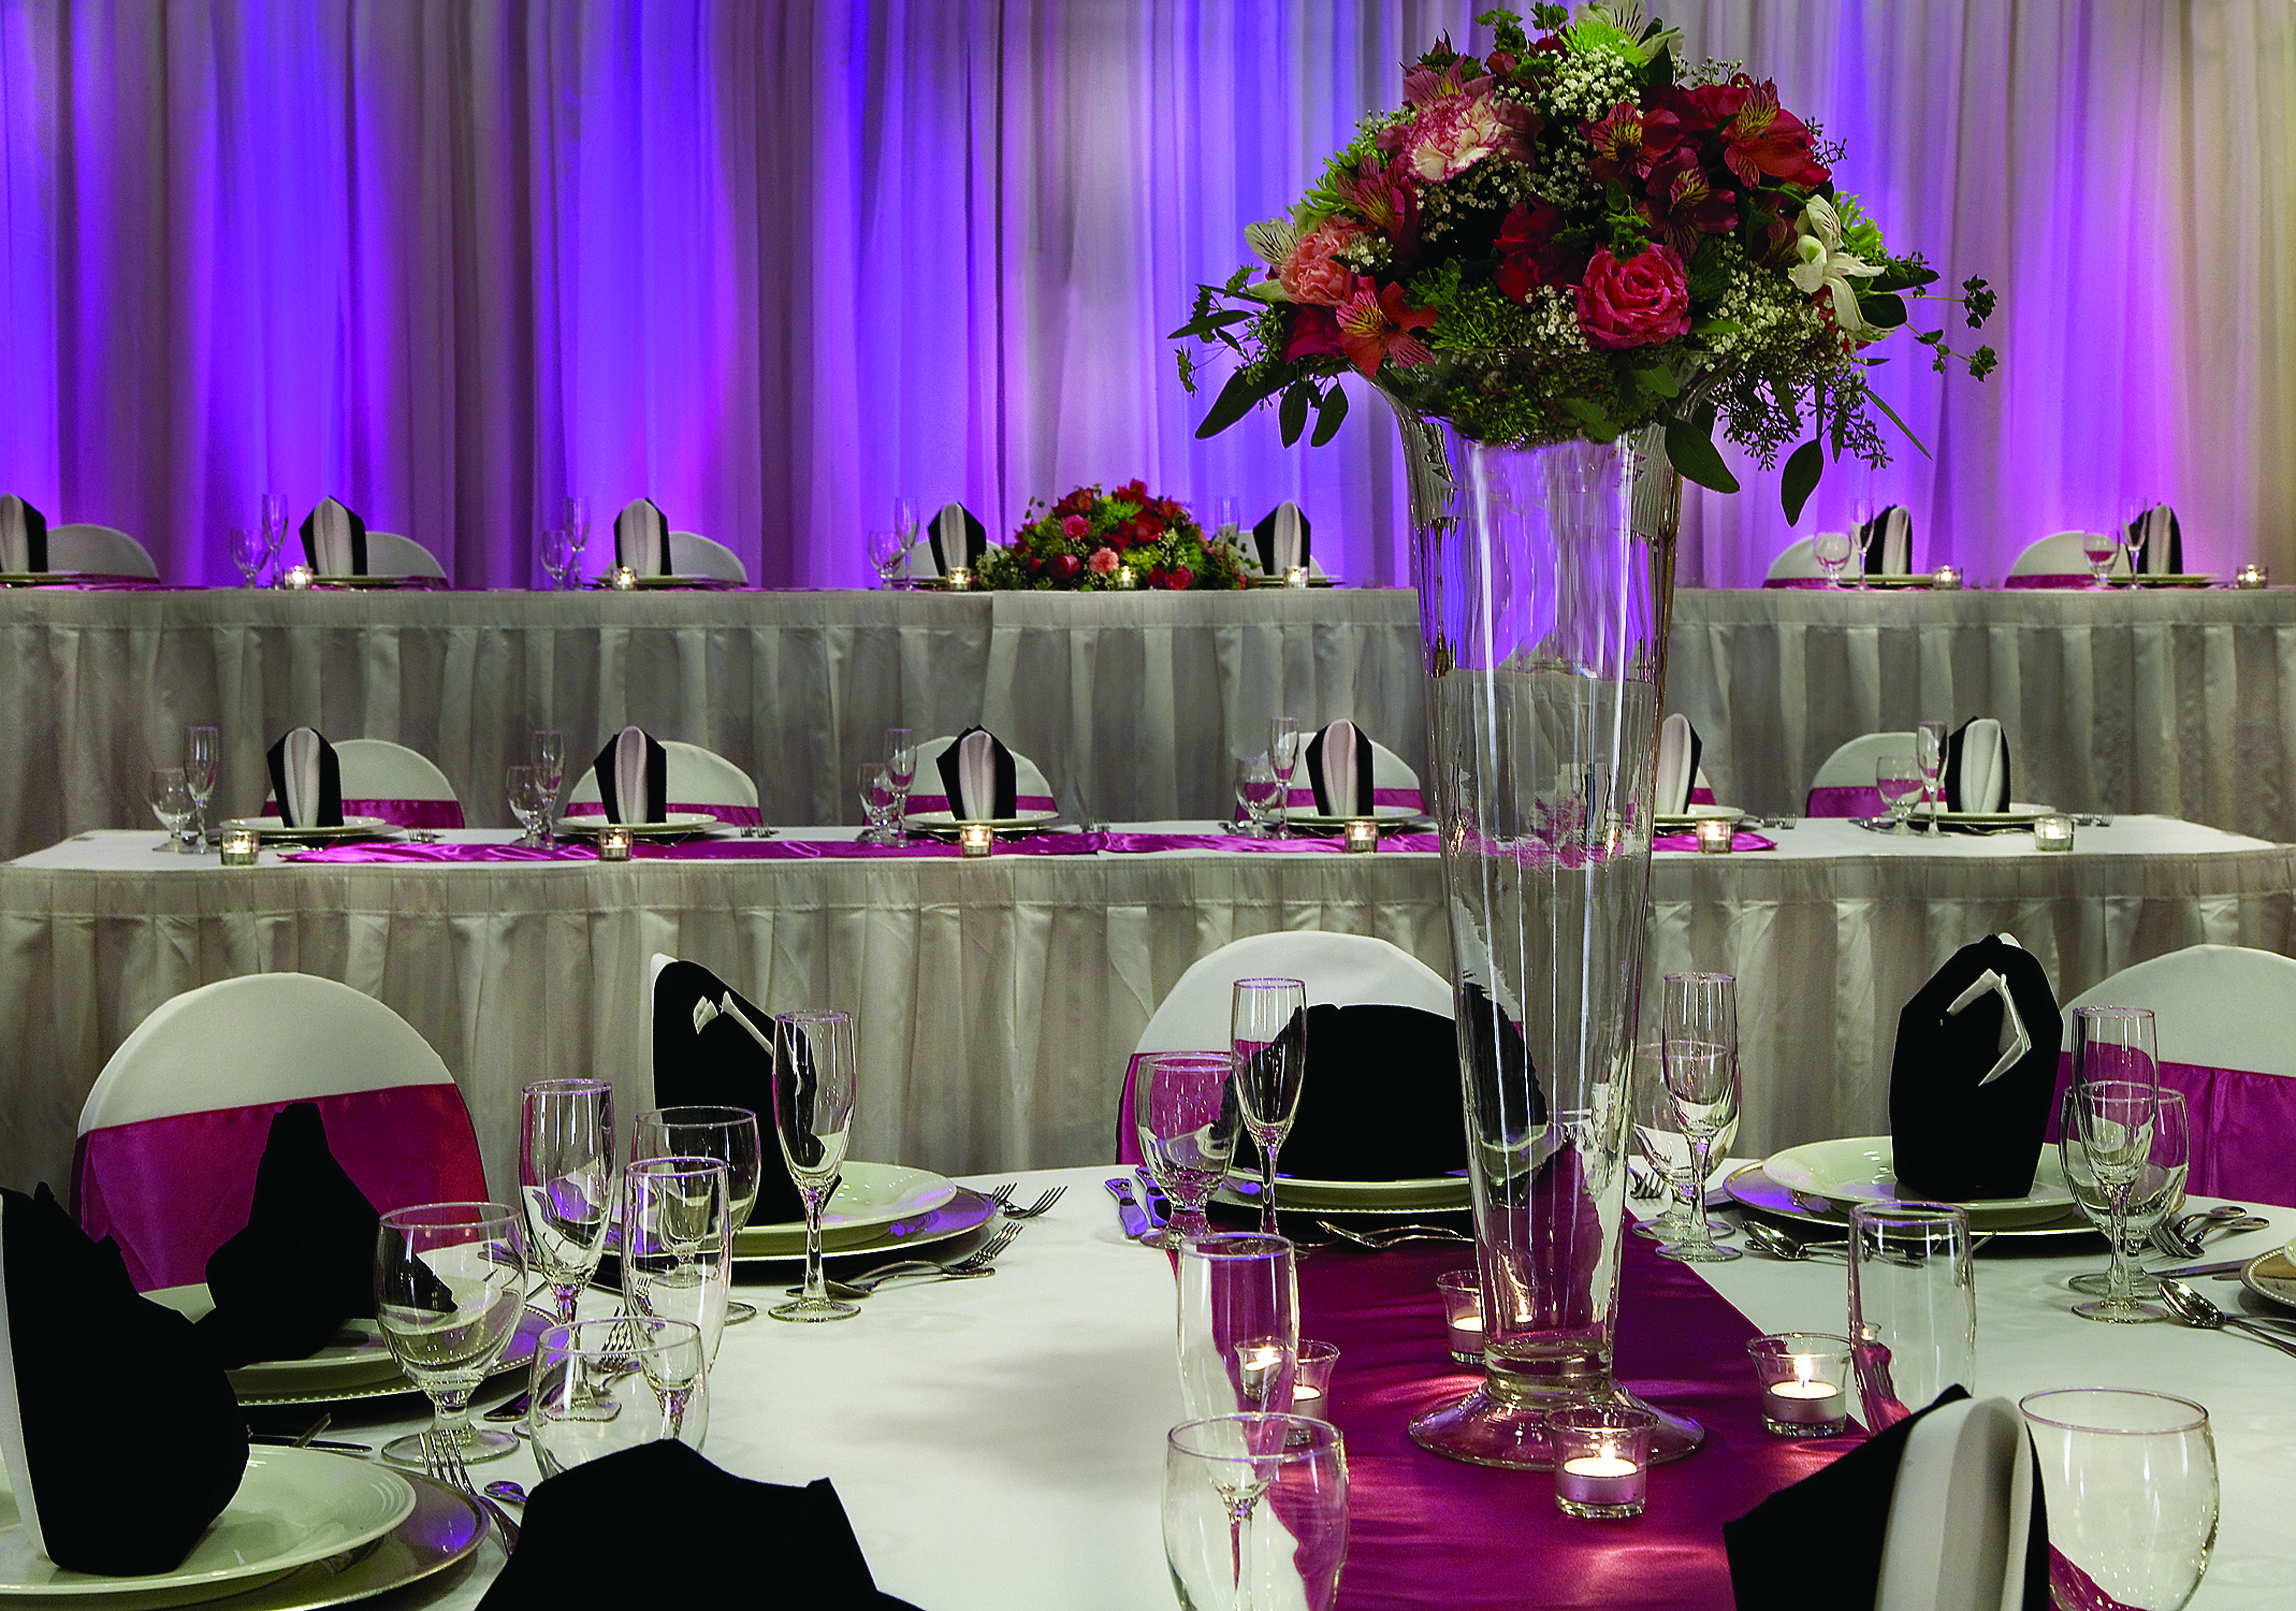 Hotel Ballroom Wedding Reception Banquet Setup